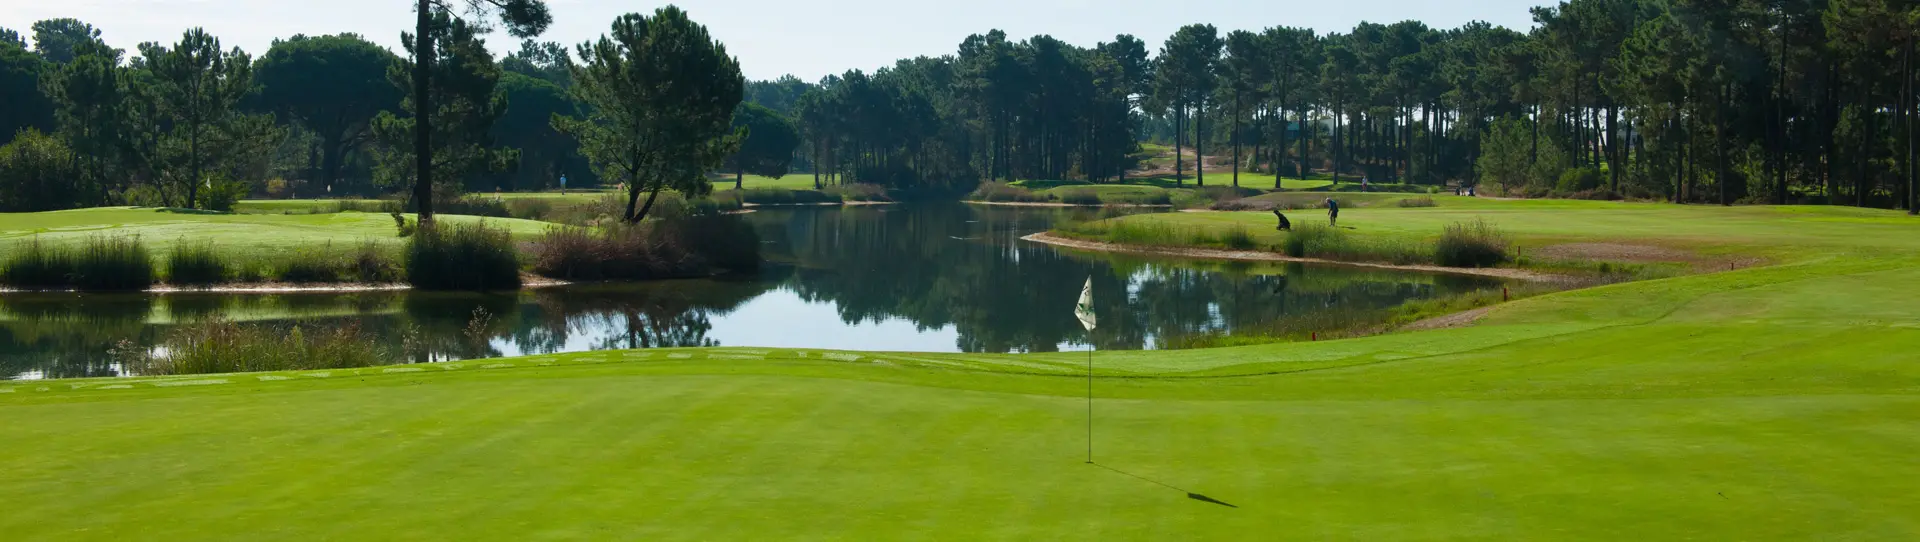 Portugal golf courses - Aroeira Challenge Golf Course (ex Aroeira II)  - Photo 1